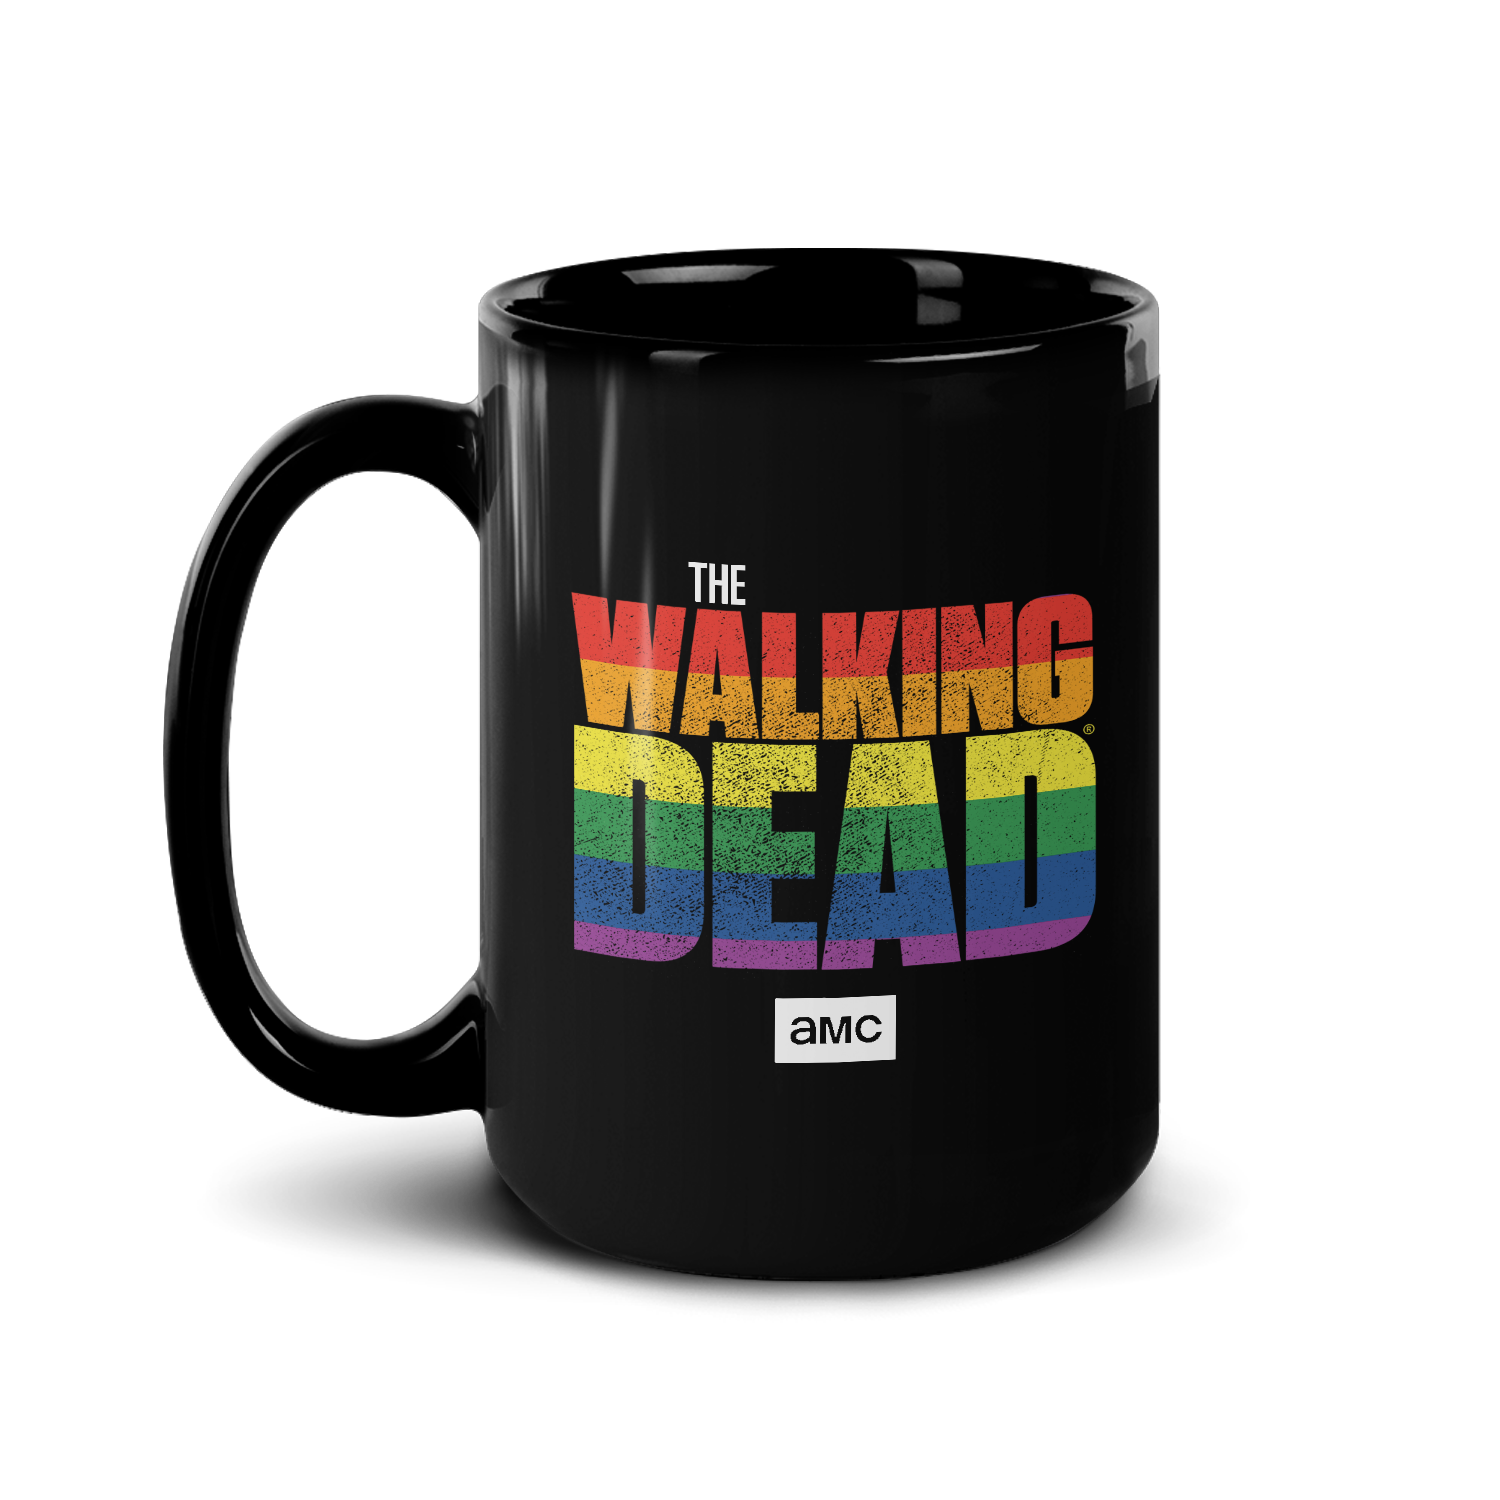 The Walking Dead Pride Logo Black Mug-2